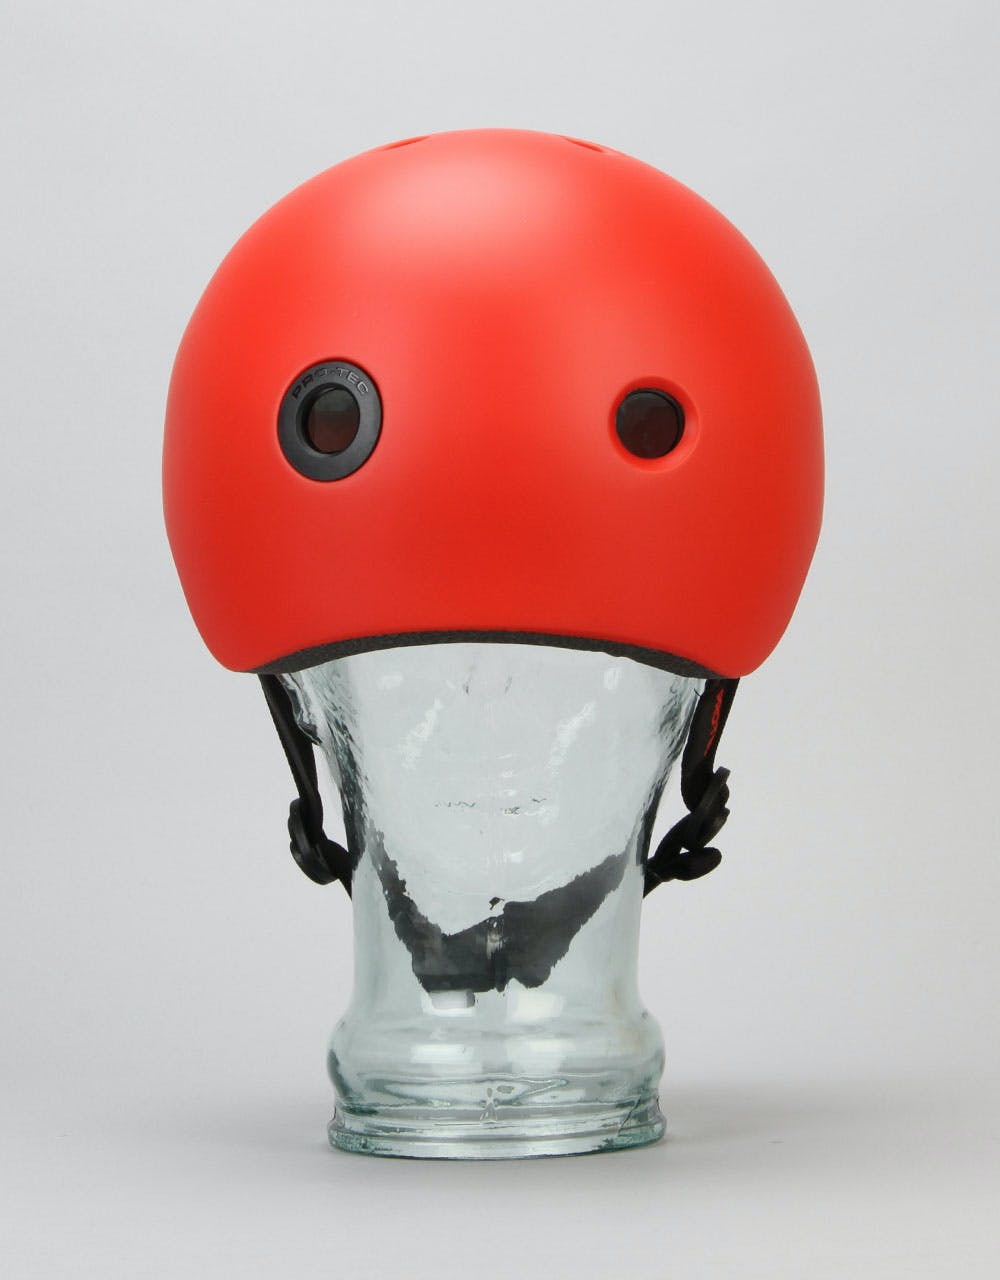 Pro-Tec Street Lite Helmet - Satin Blood Orange